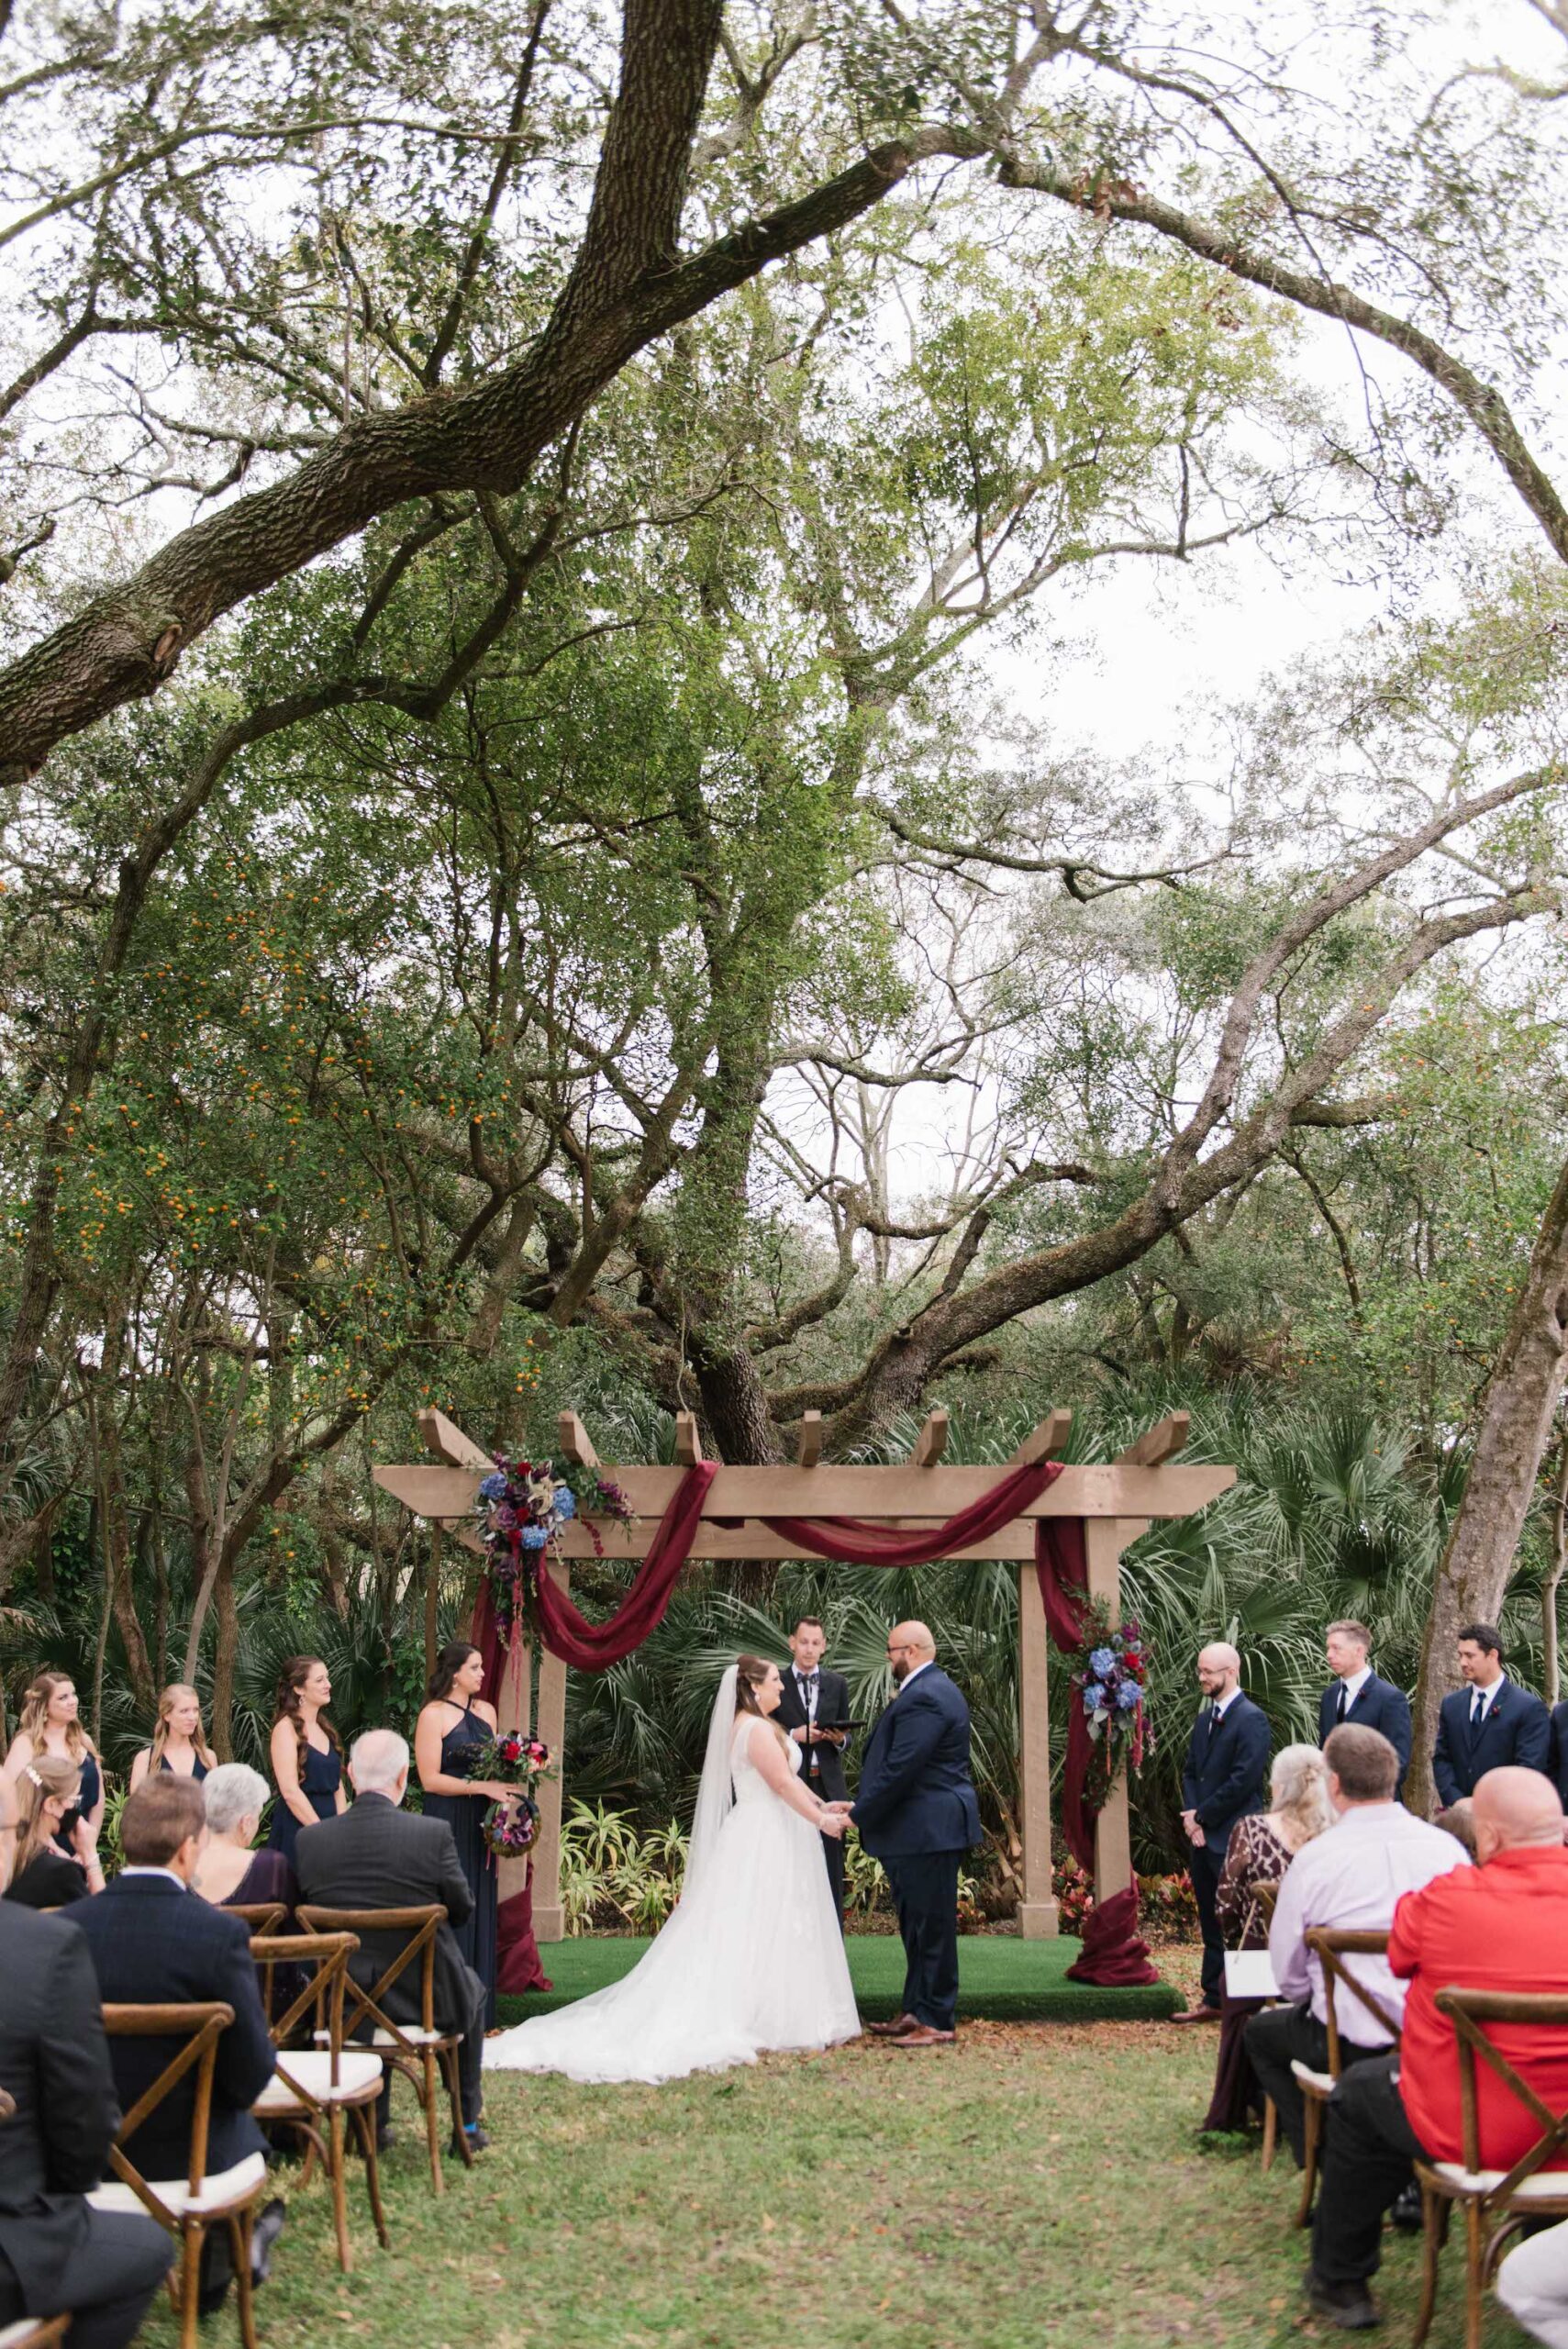 Bride and Groom Exchange Vows | Outdoor Rustic Wedding Ceremony